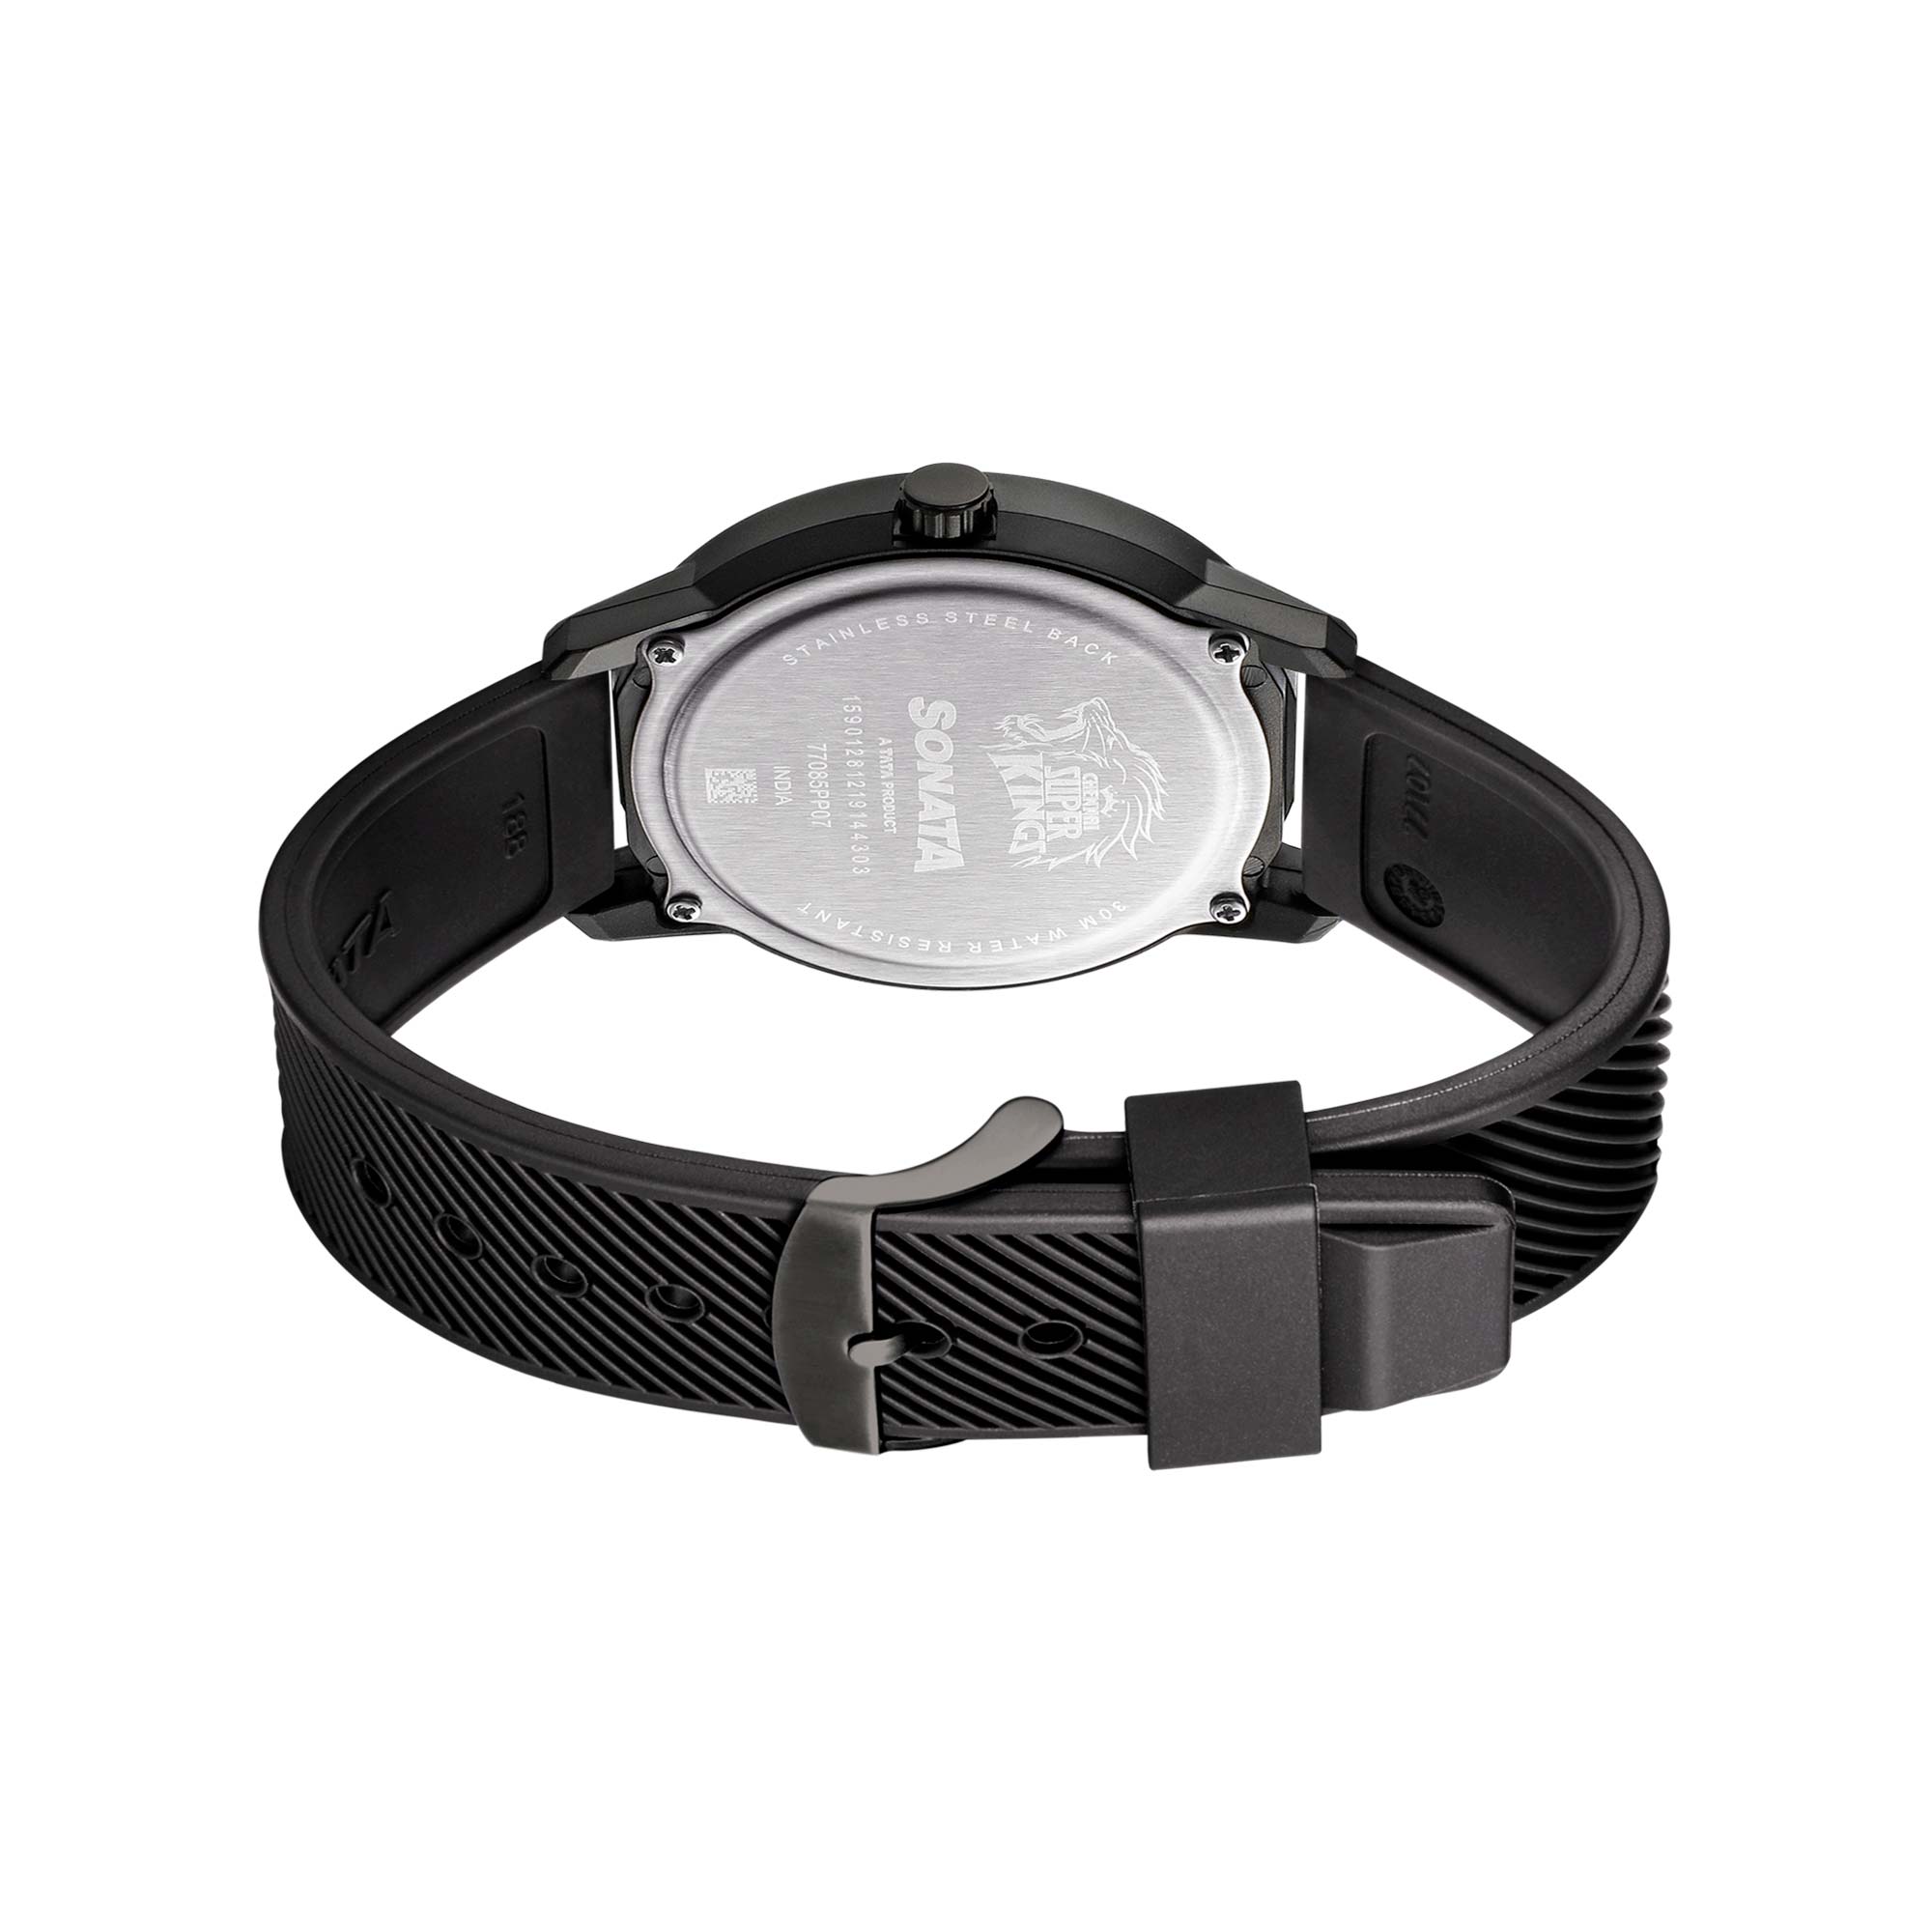 Sonata Csk Quartz Analog Black Dial TPU Strap Unisex Watch